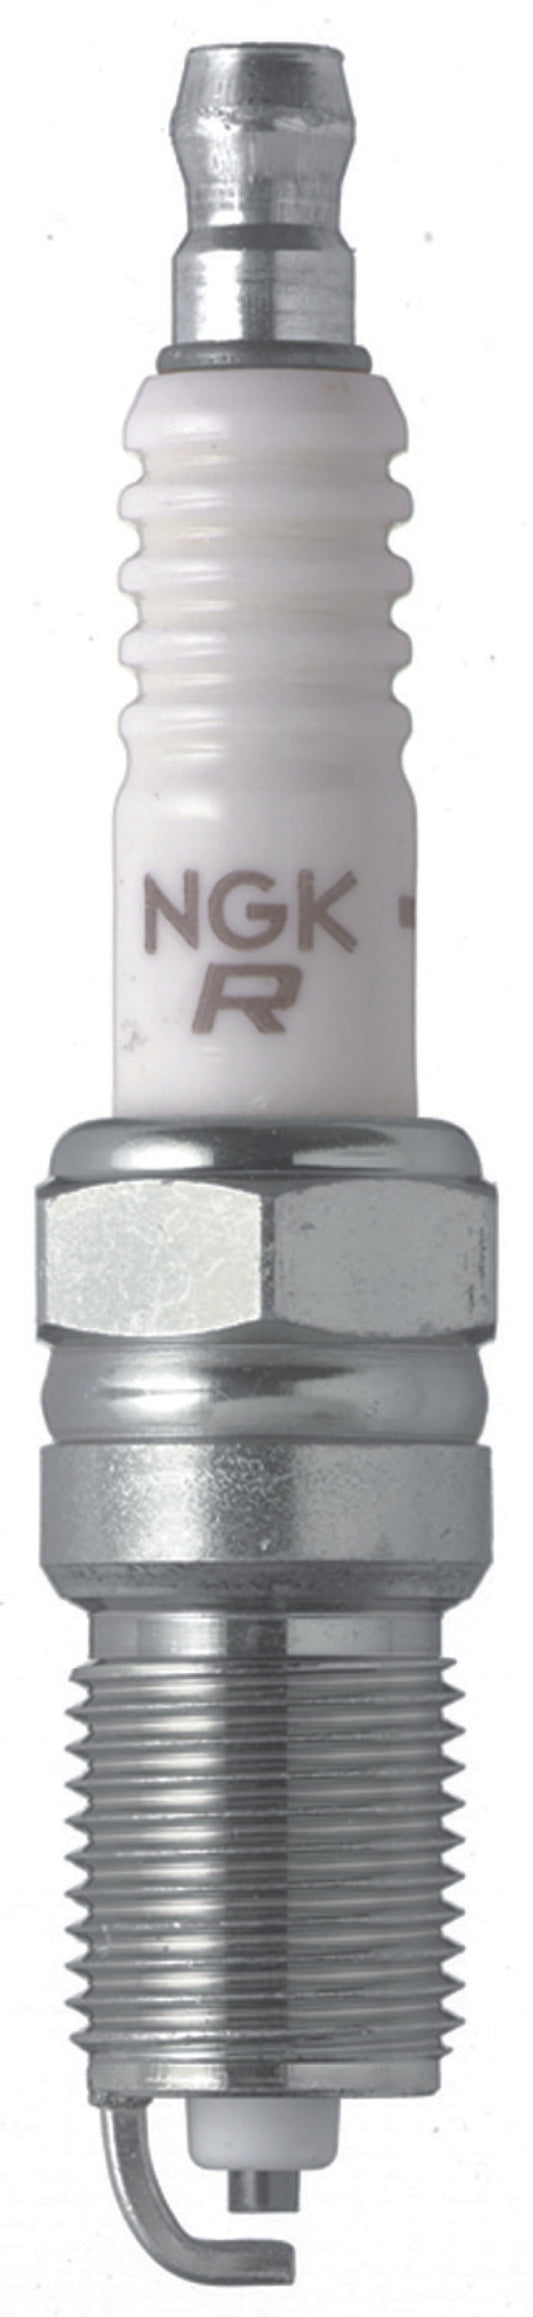 NGK V-Power Spark Plug Box of 4 (TR4)